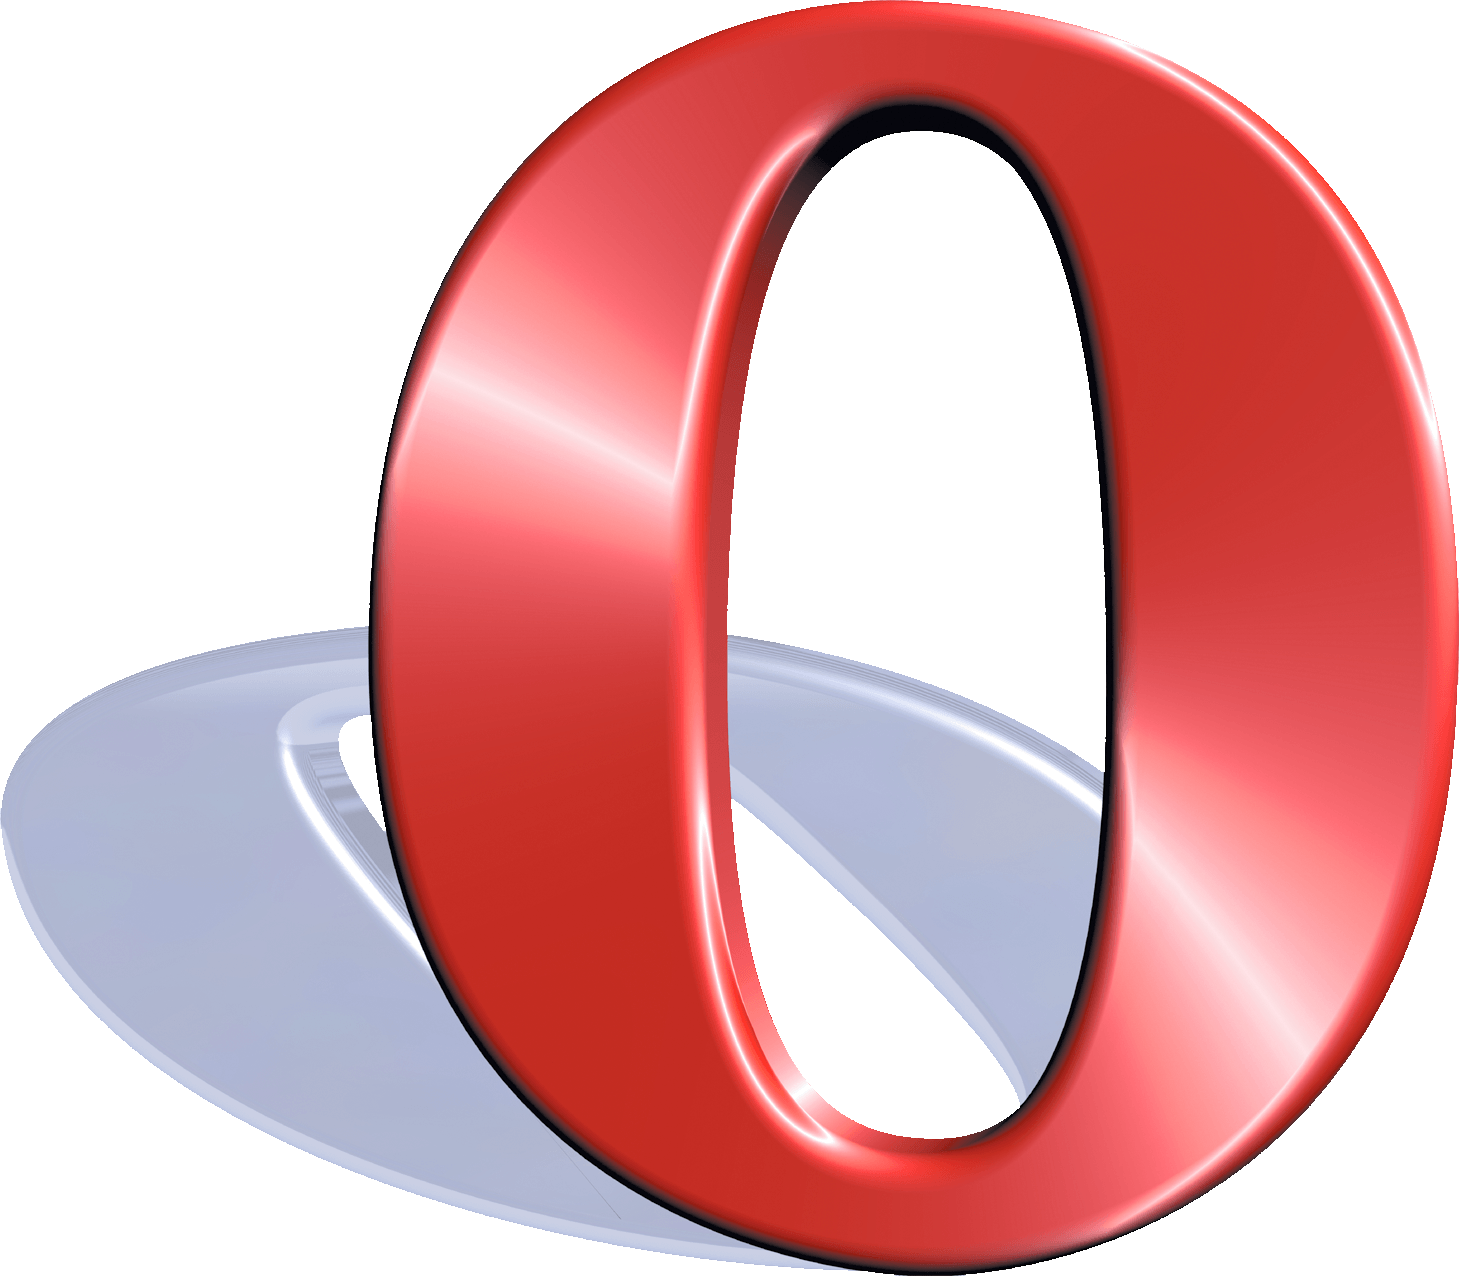 Opera Browser Logo - Opera (web browser) | Logopedia | FANDOM powered by Wikia